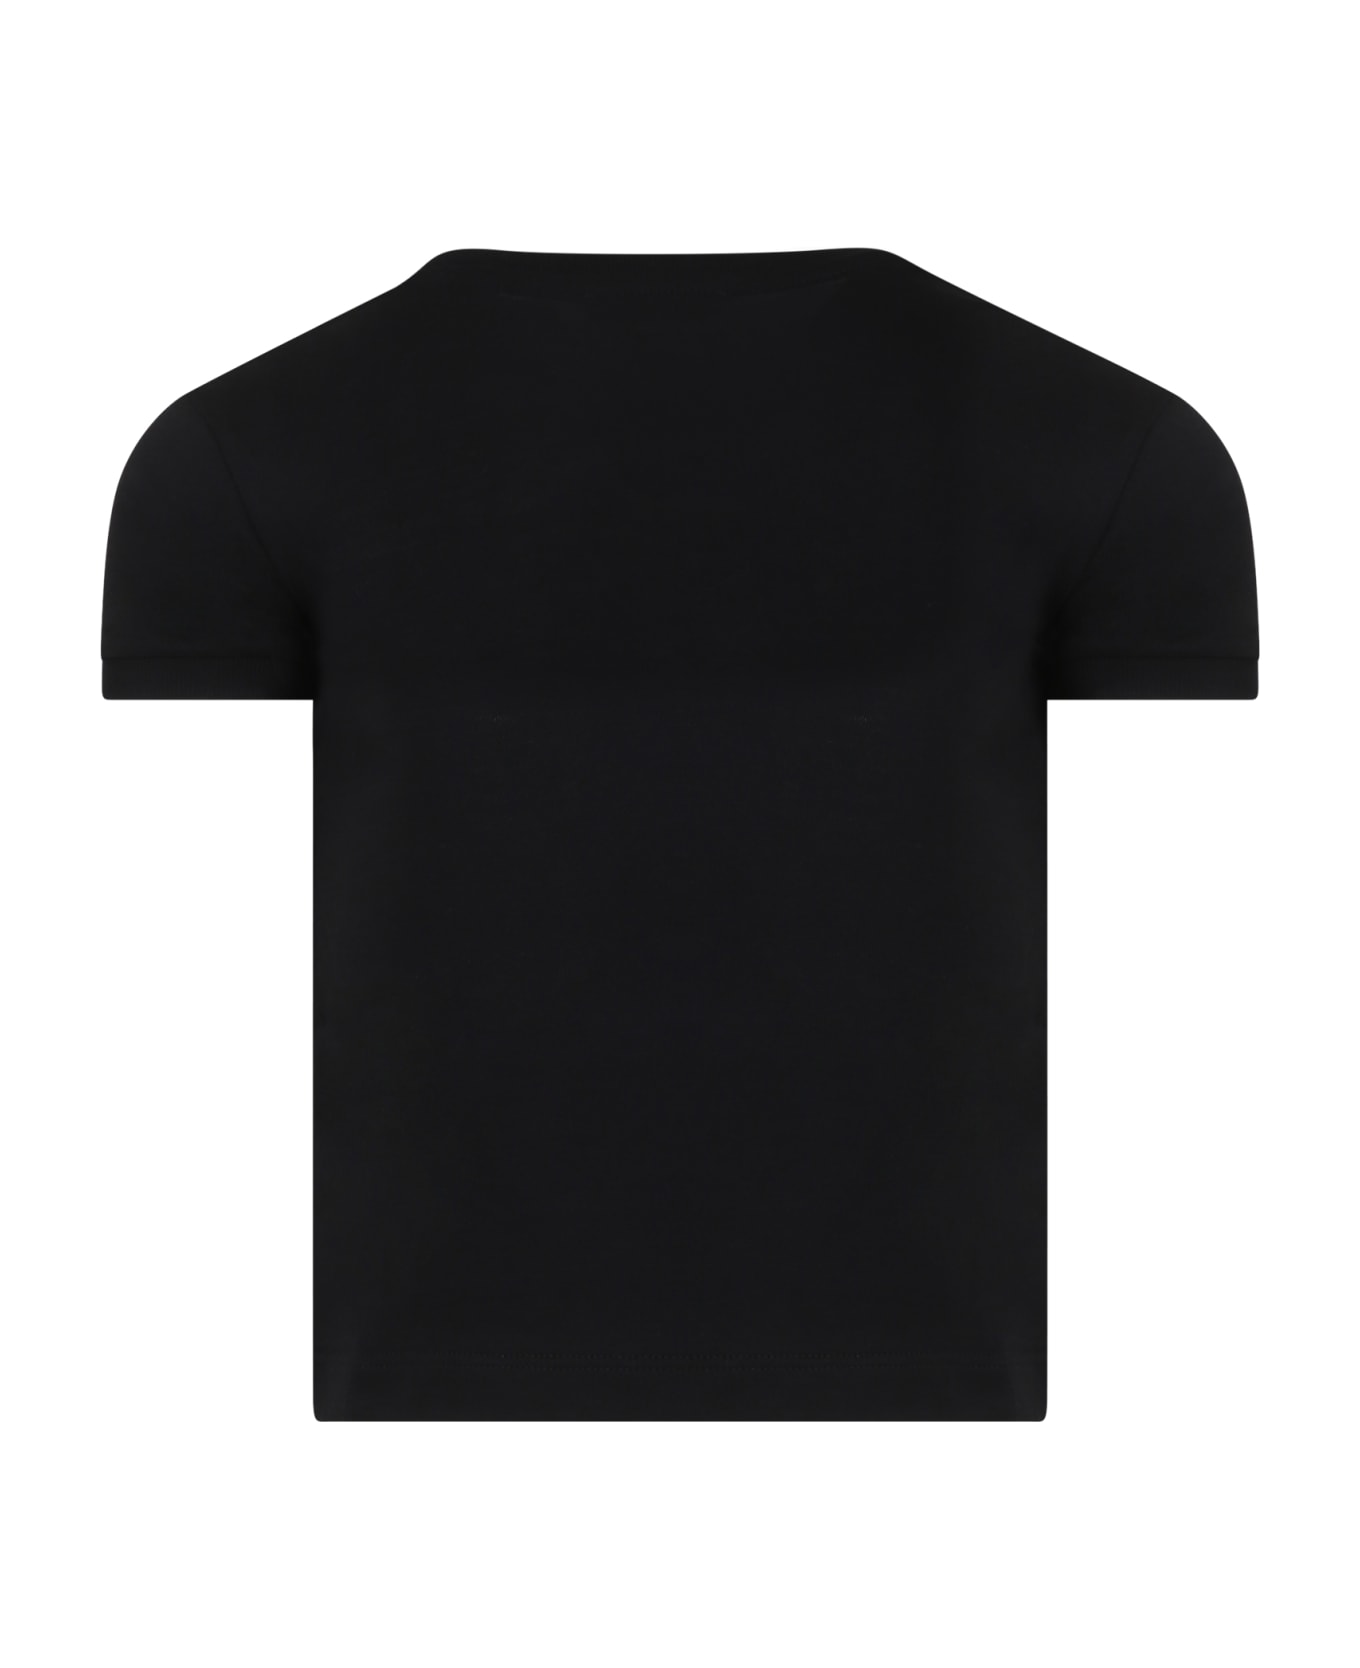 Dolce & Gabbana Black T-shirt For Girl With Iconic Monogram - Black